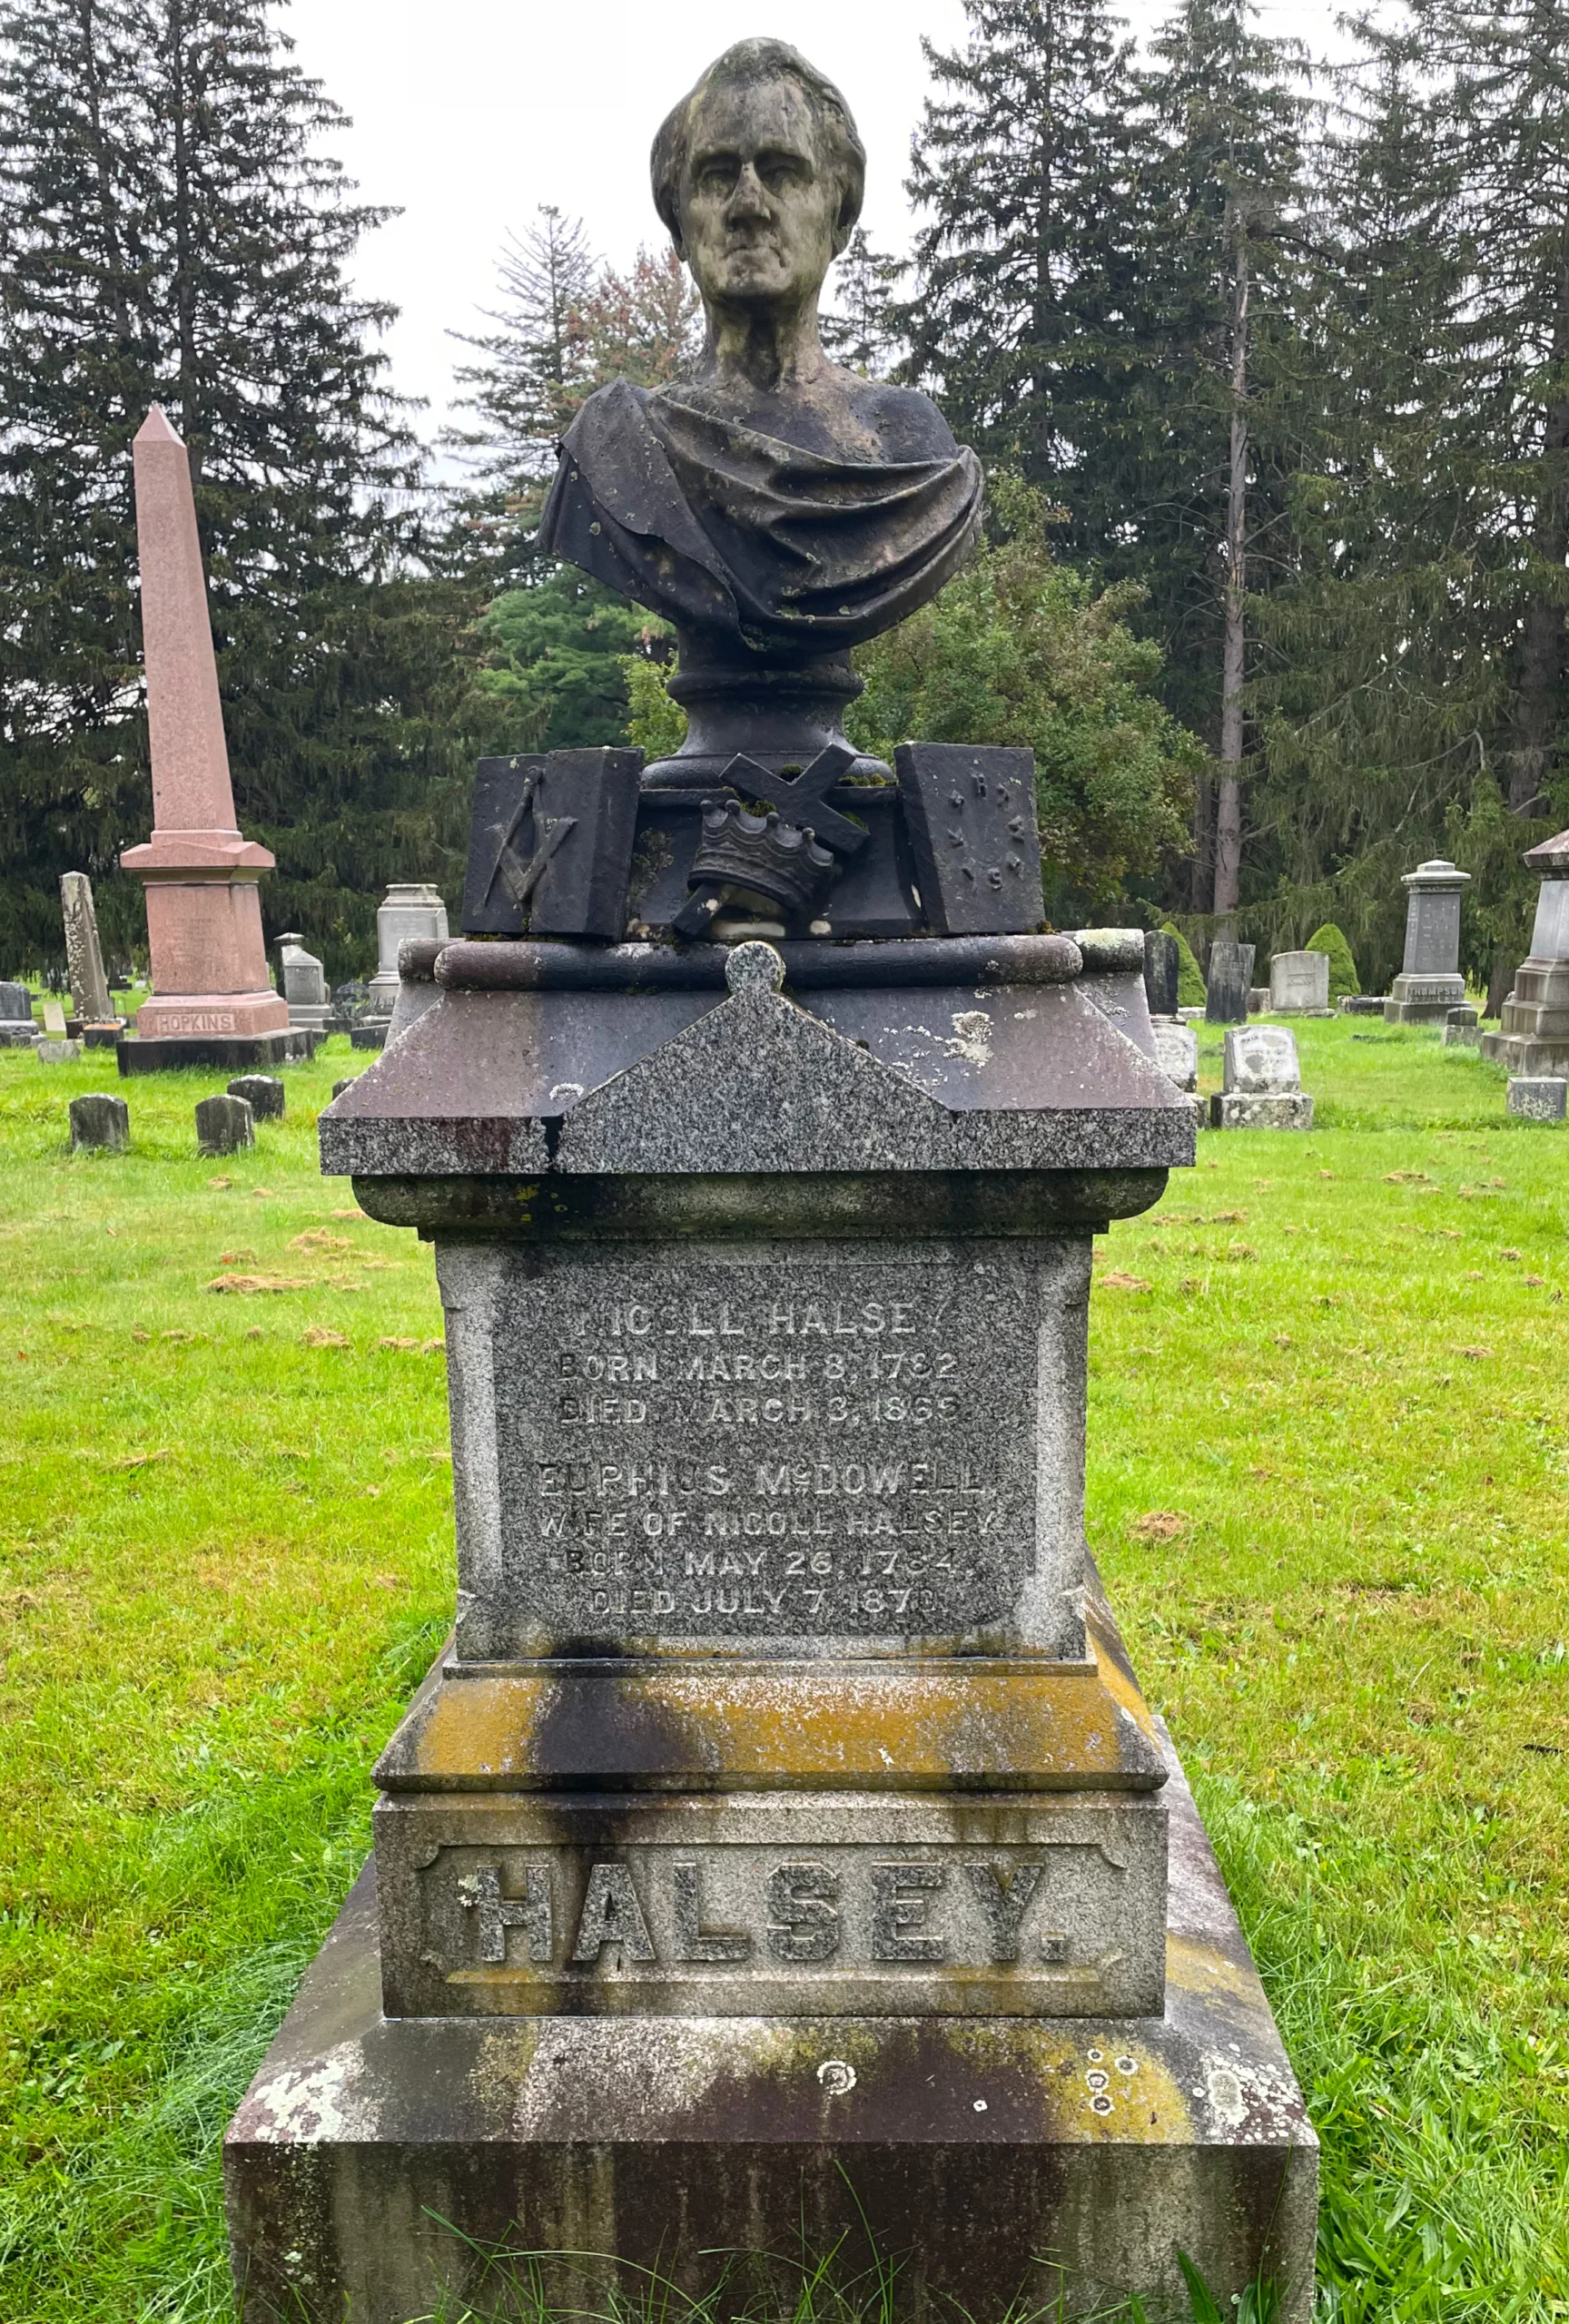 Nicoll Halsey headstone